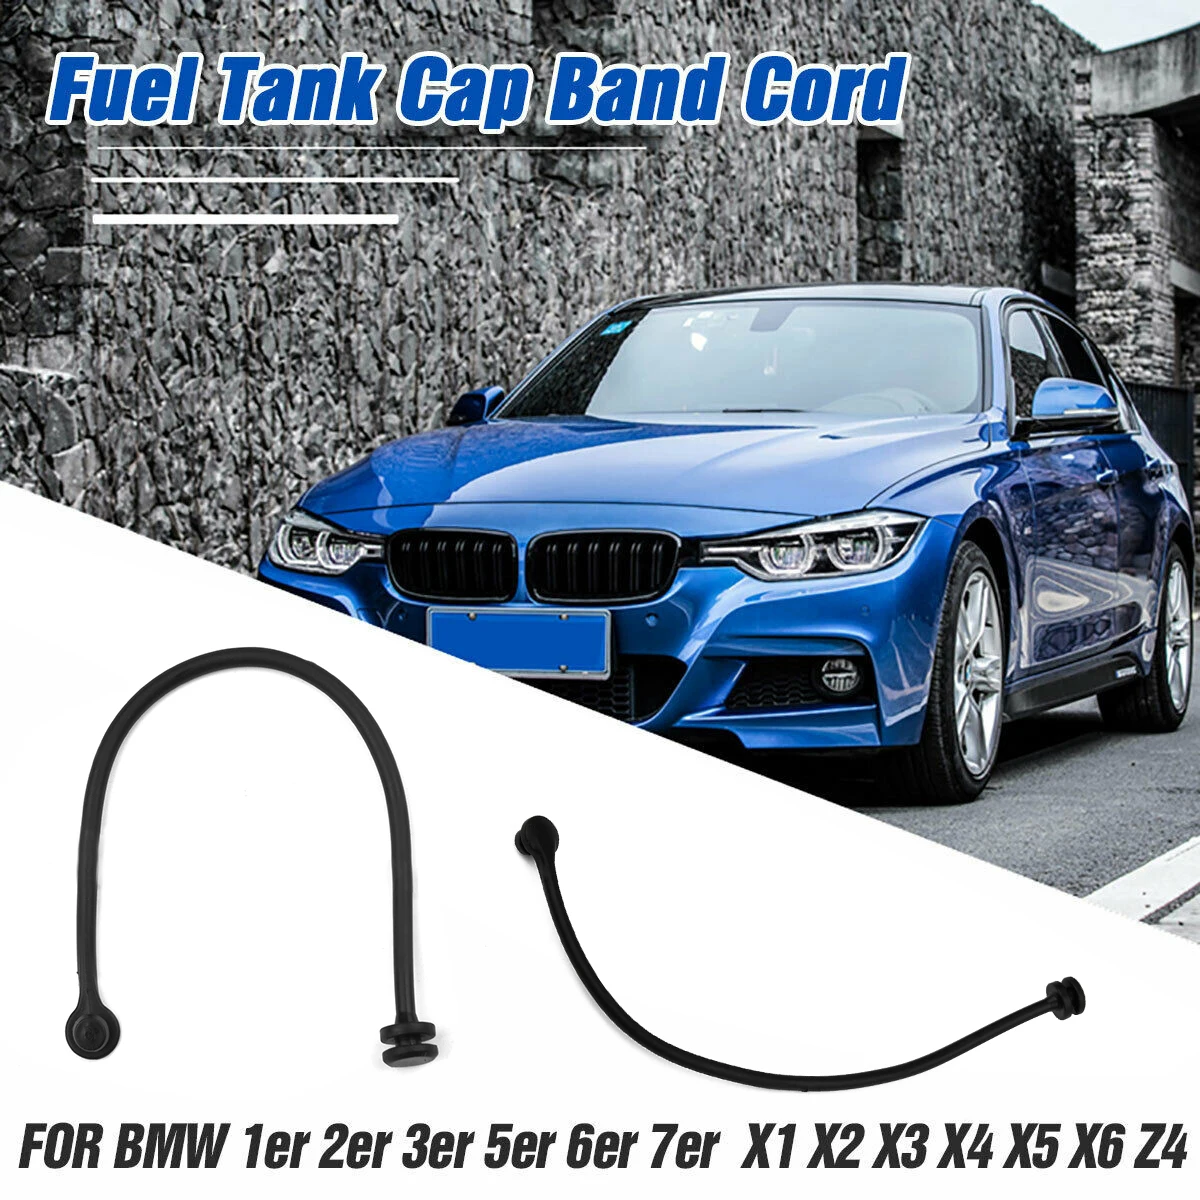 

1pc 13.6cm Black Fuel Tank Cap Band Cord New NBR For BMW E81 E87 E88 E46 E90 E91 E39 X3 -X5 X6 Z4 16117193372 Tear-resistant